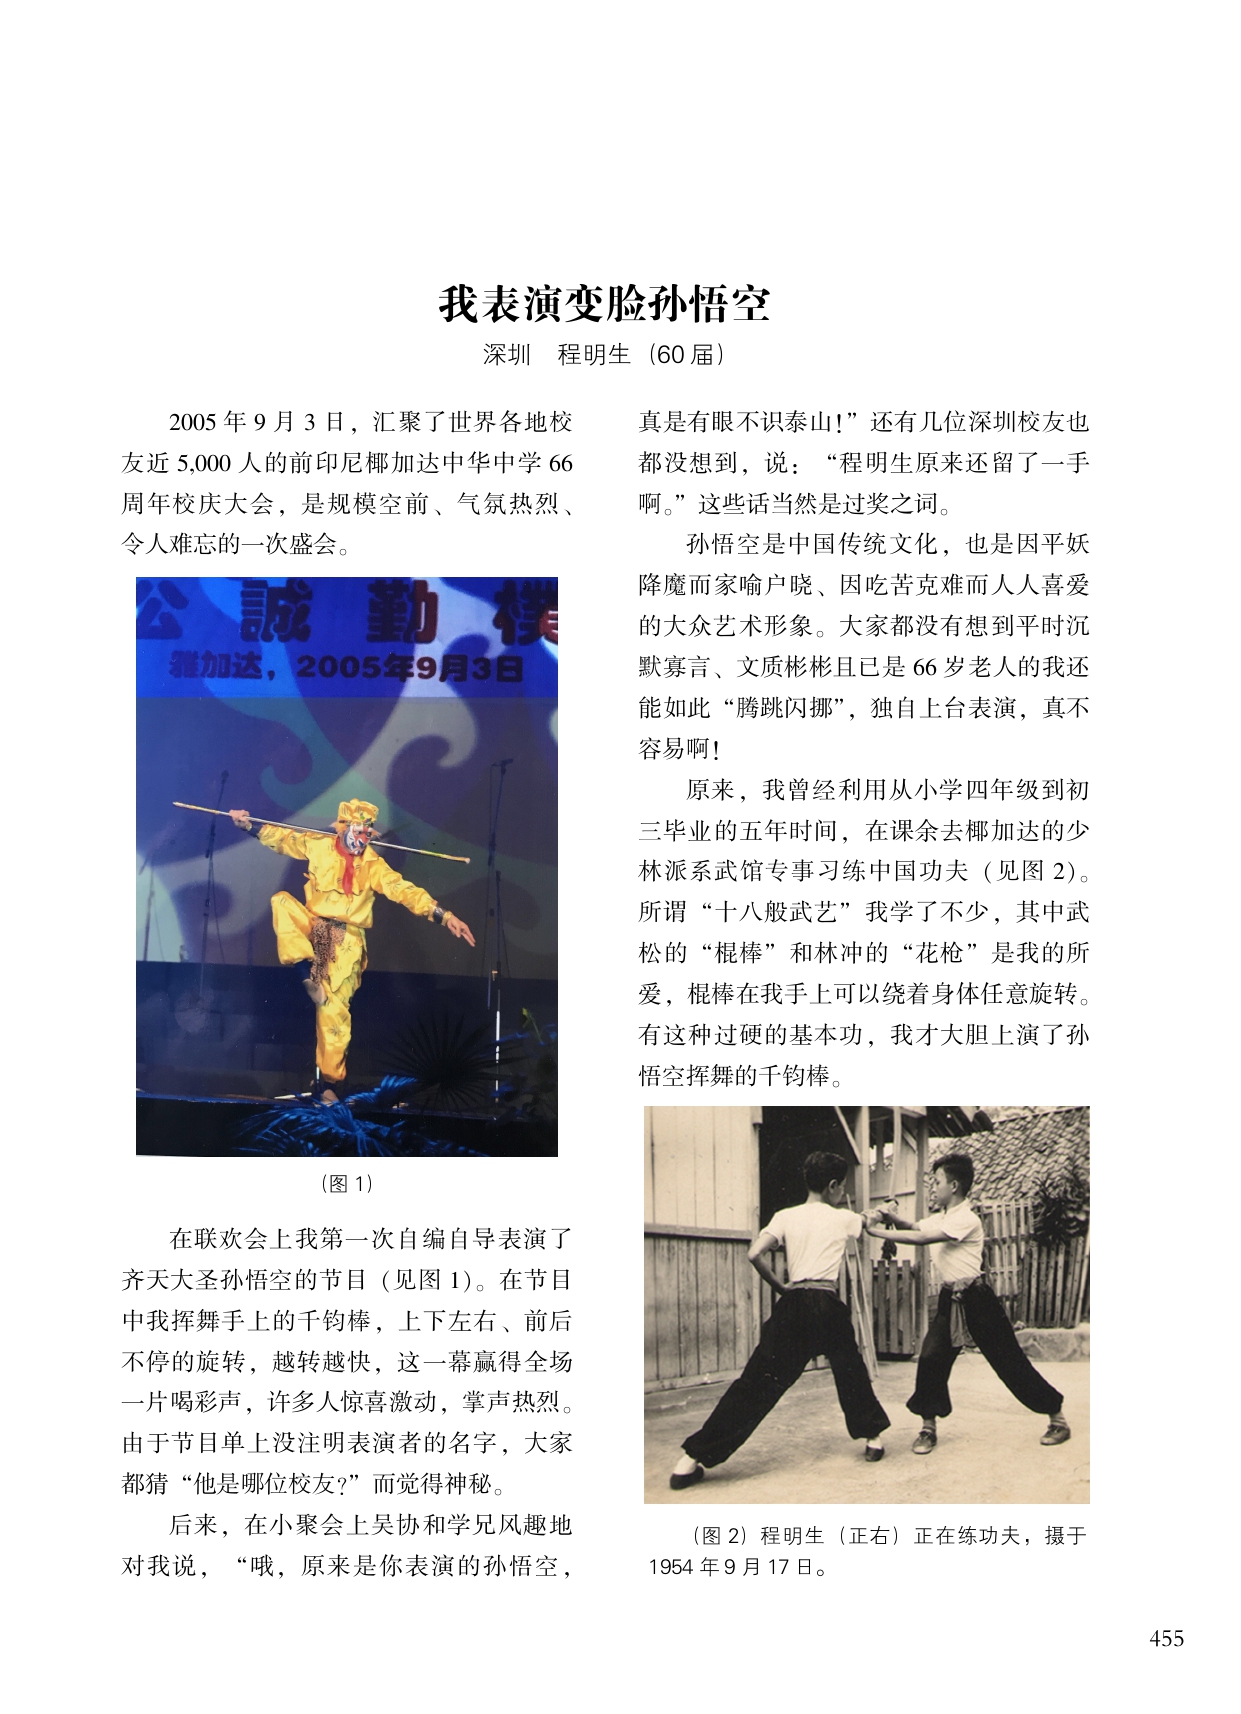 mڪt变脸孙šn (1) page 0001